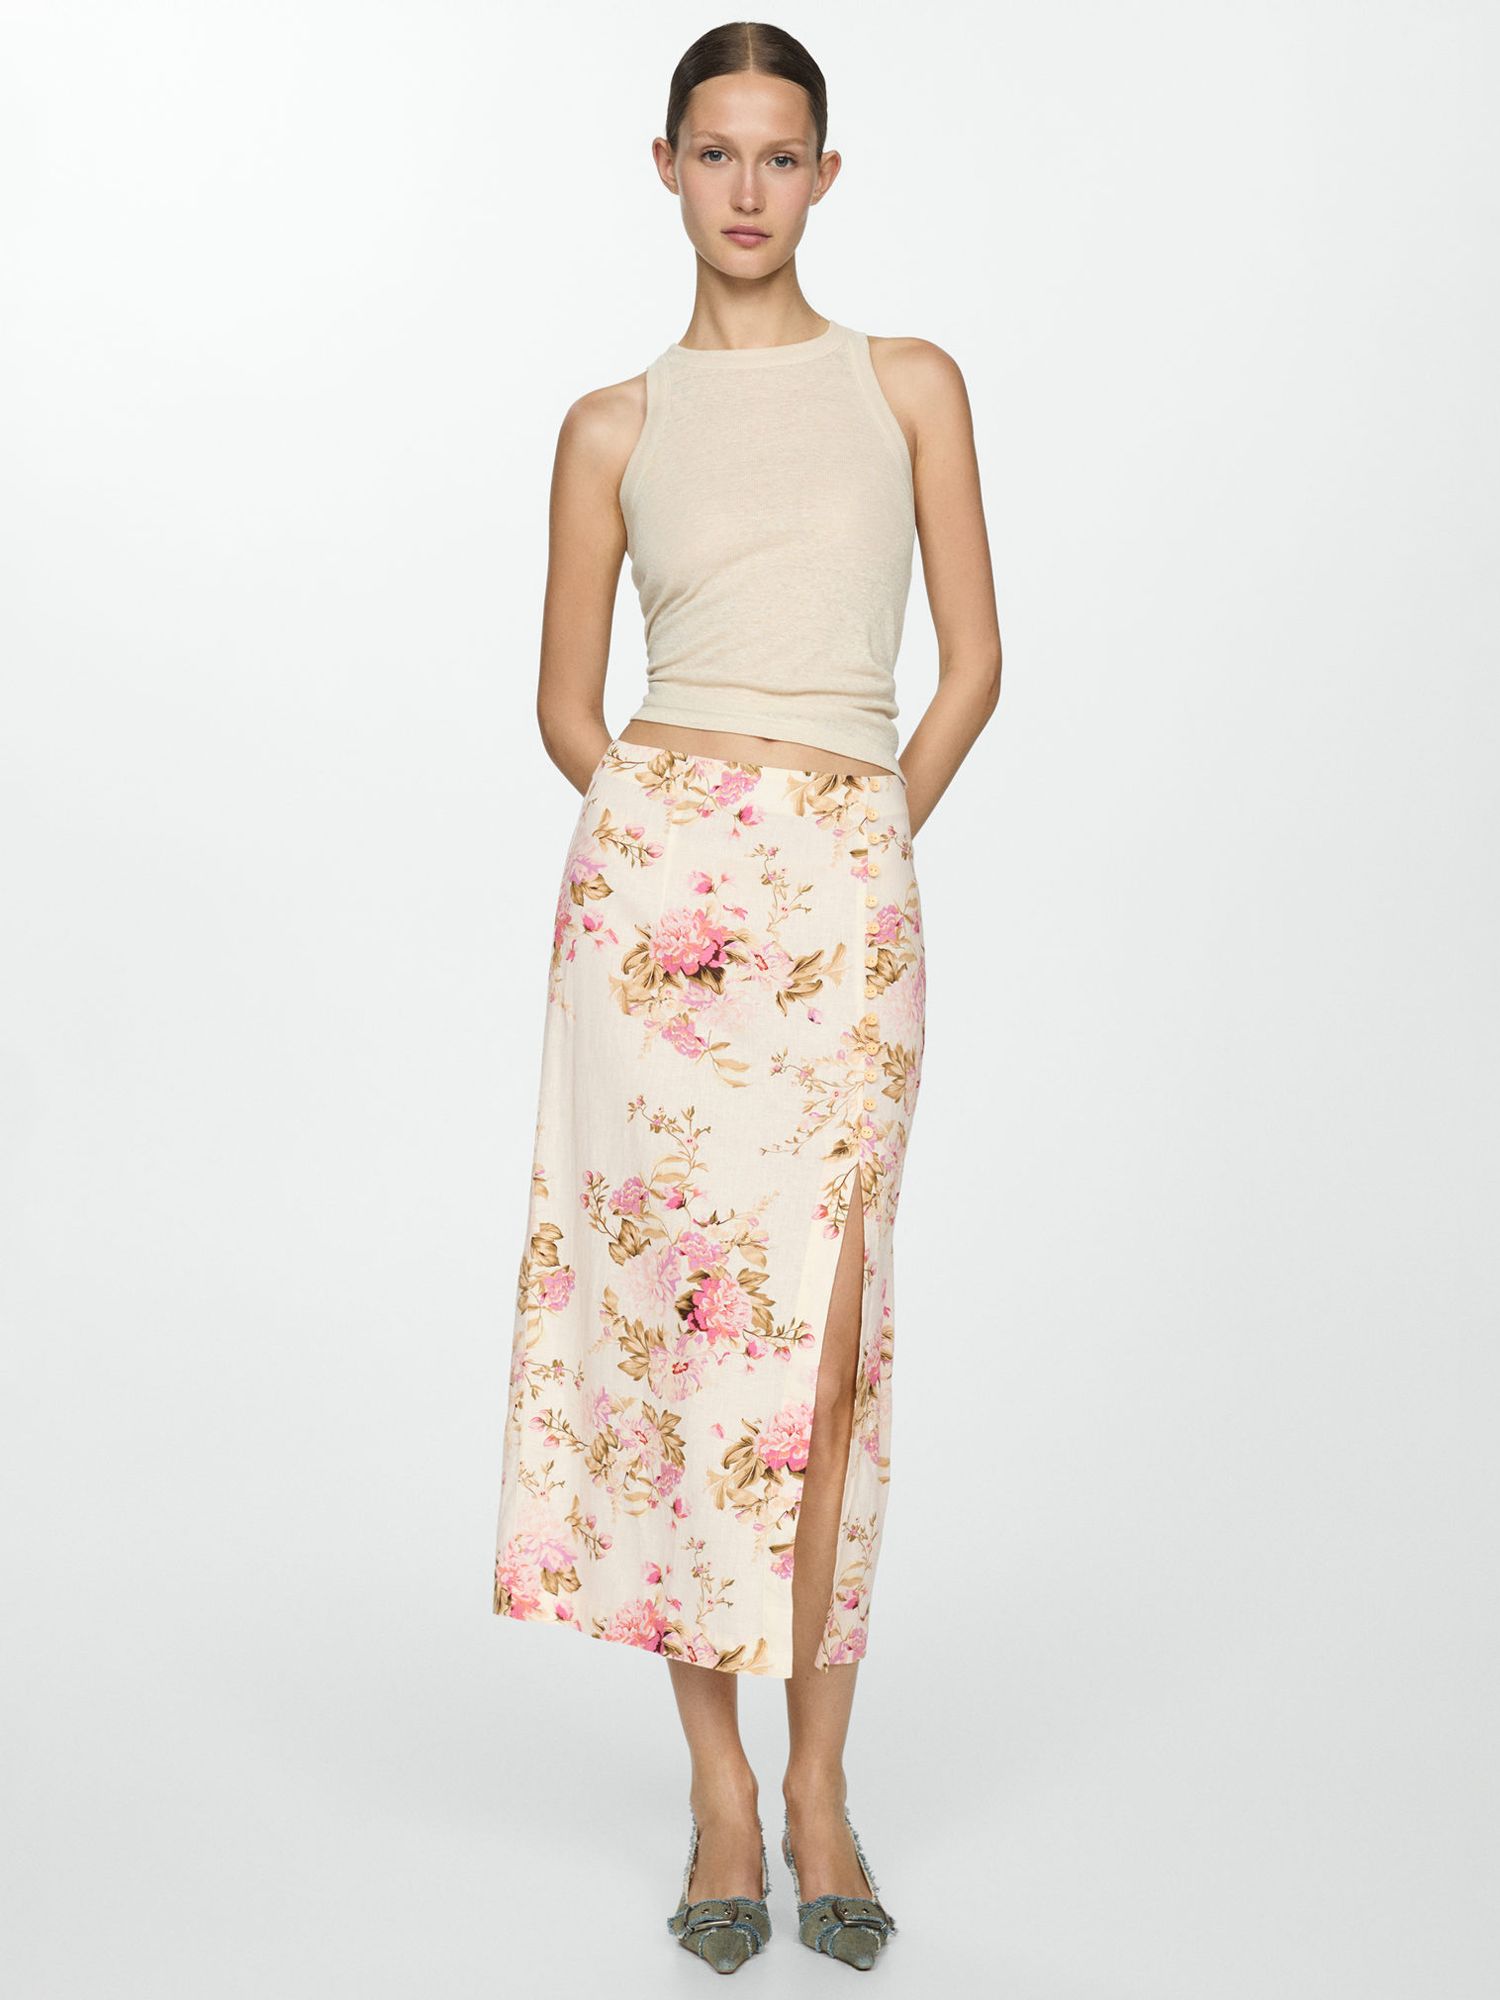 Mango Carla Floral Print Linen Blend Midi Skirt, Cream/Multi, 10